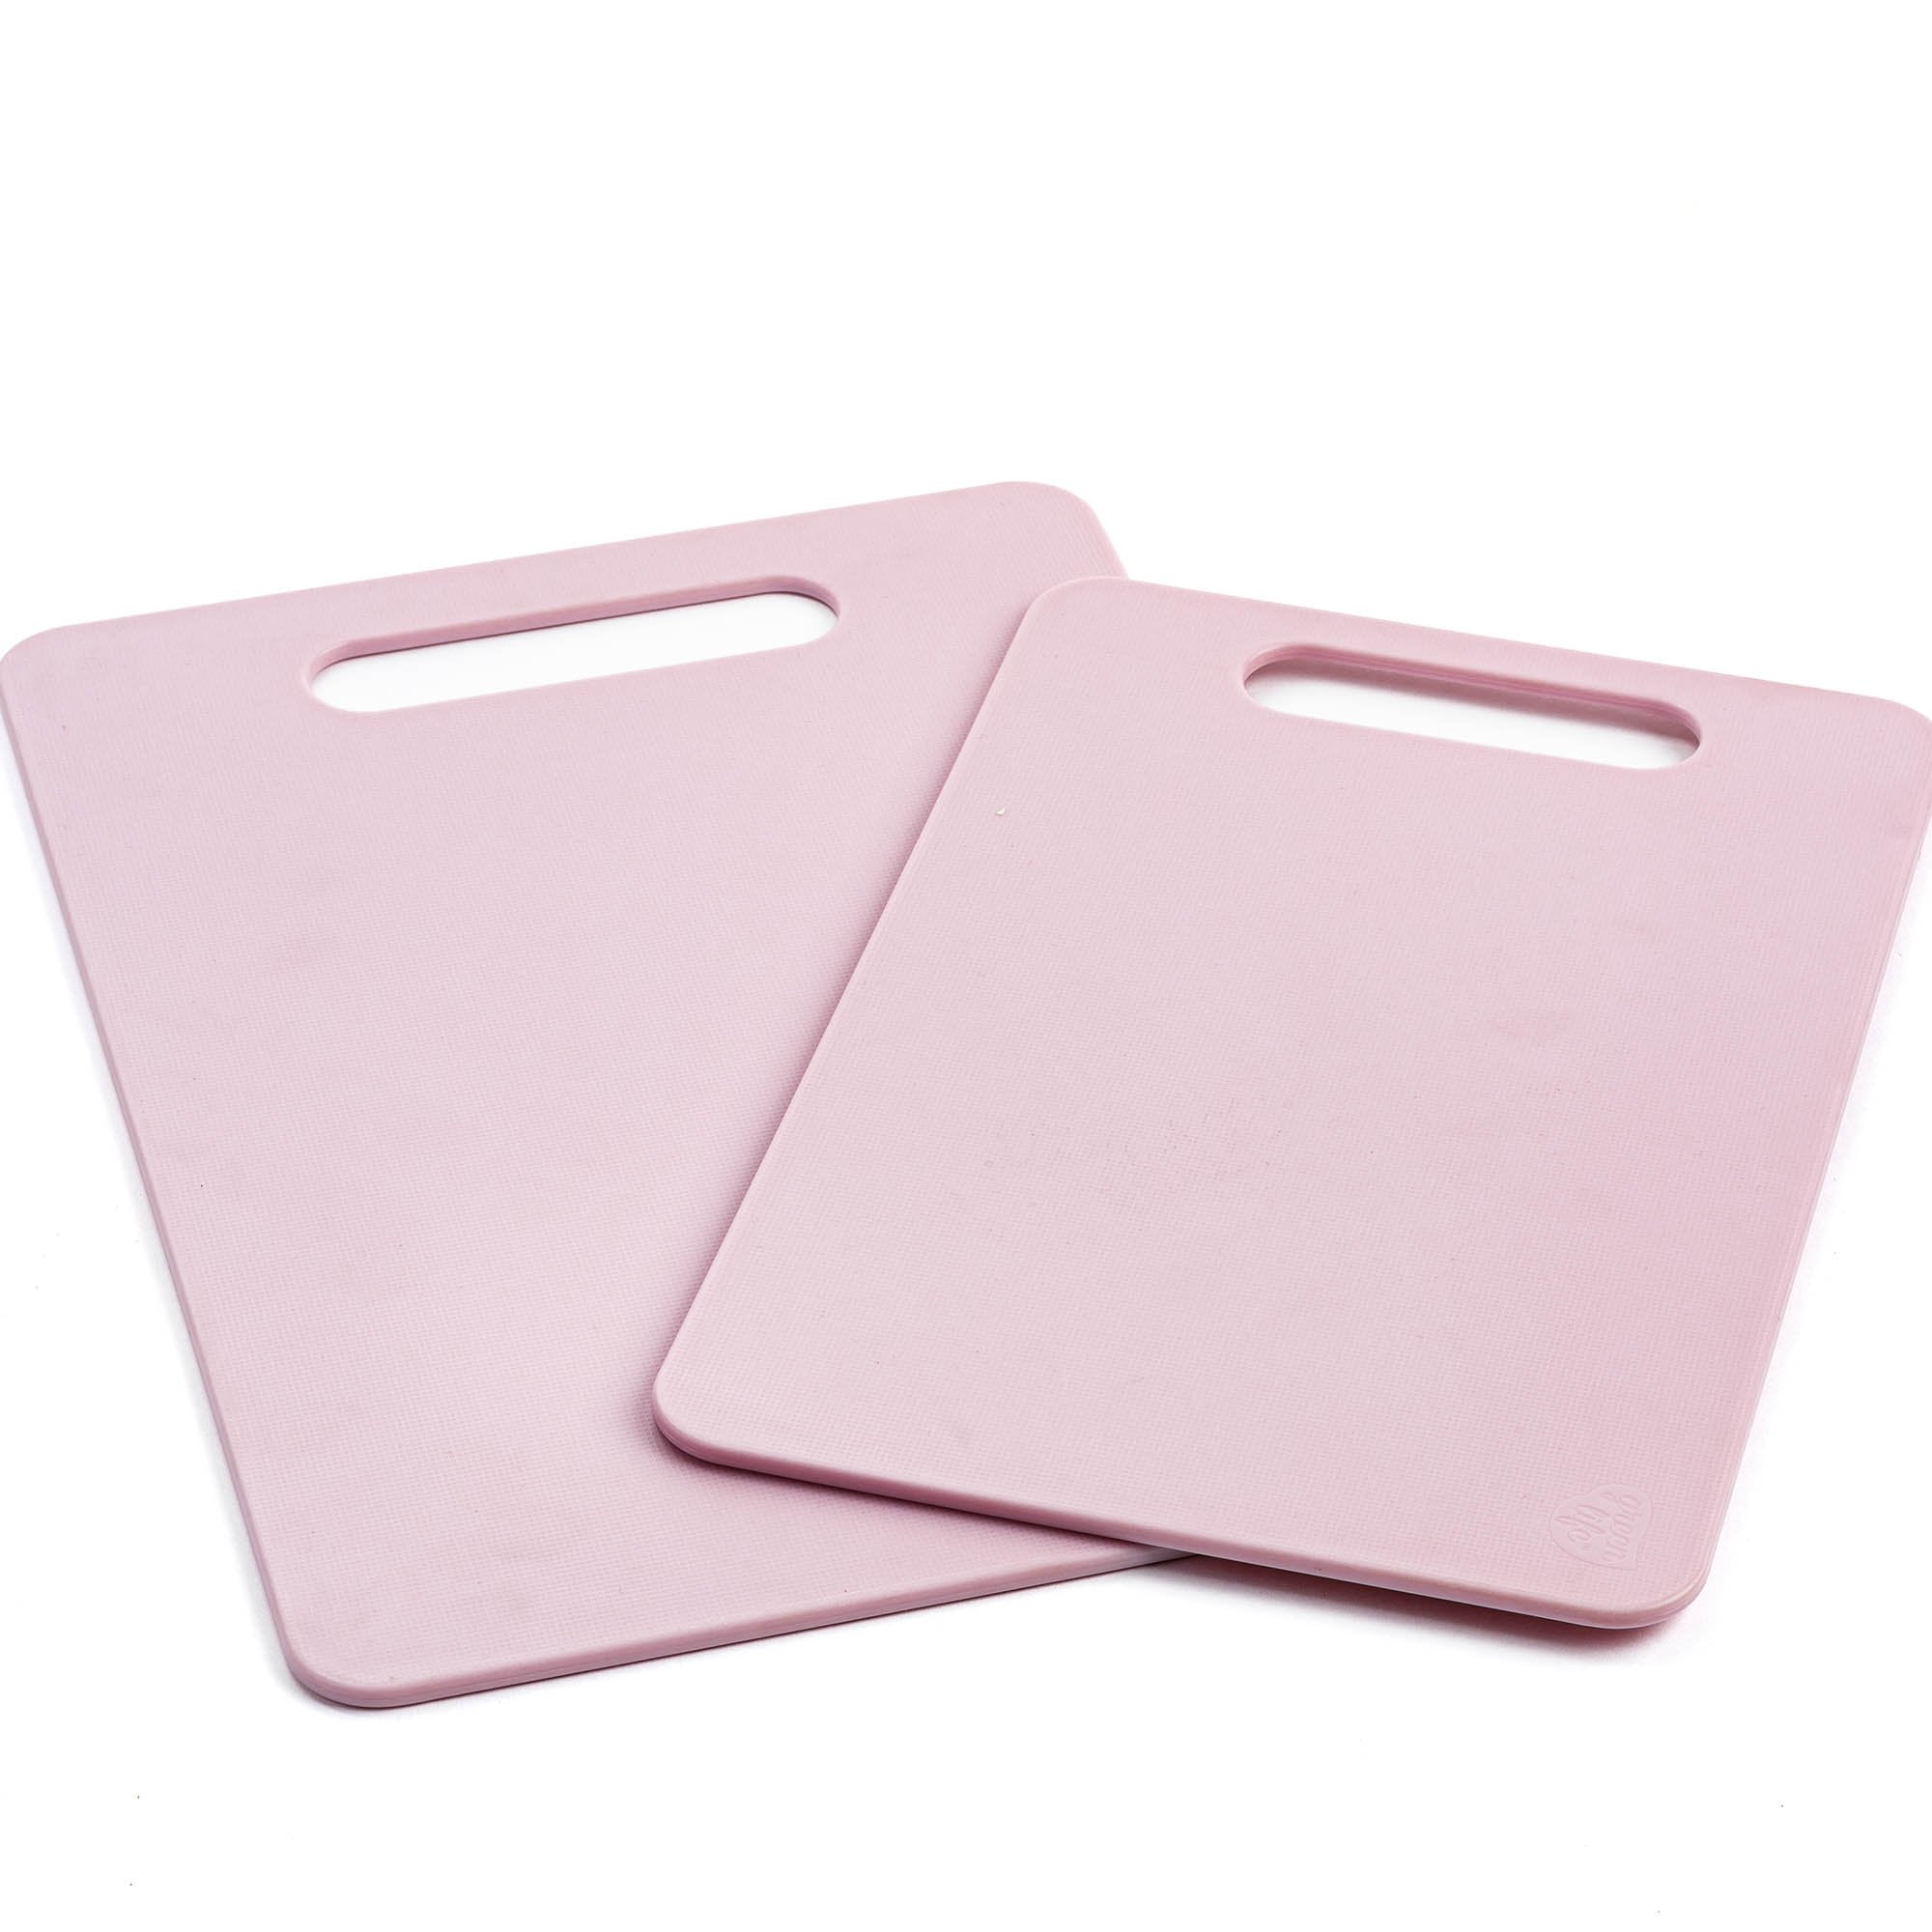 2 Piece Cutting Board Kitchen Set Dishwasher Safe Extra Durable Bright Pink